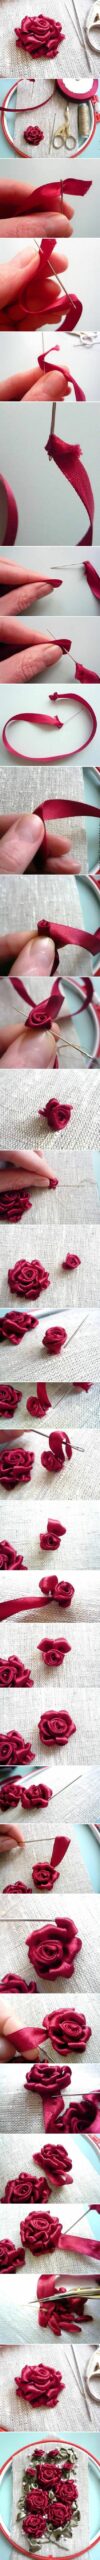 Вышивка лентами: розы фото МК